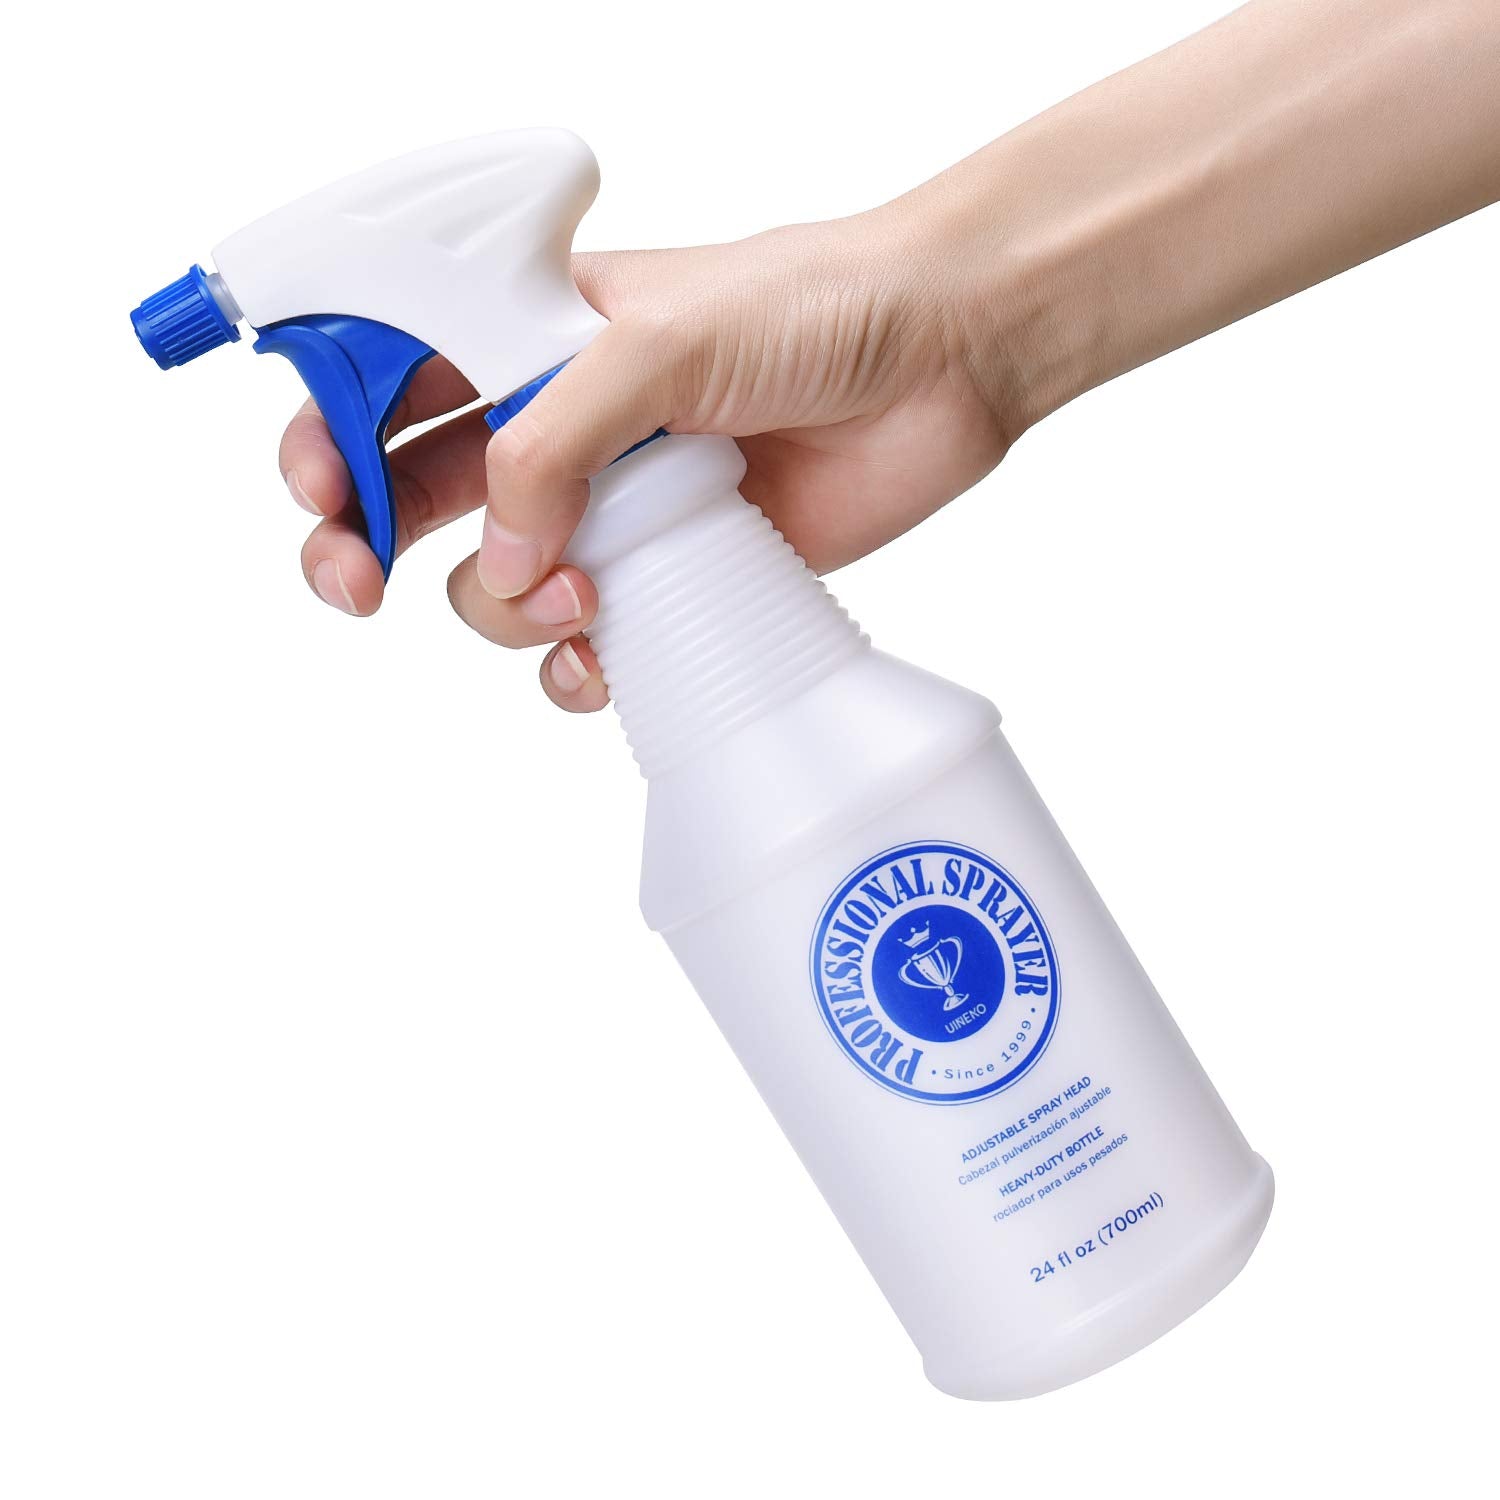 Plastic Spray Bottle 4 Pack 24 Oz (Upgraded Sprayer) All-Purpose Heavy –  Uineko